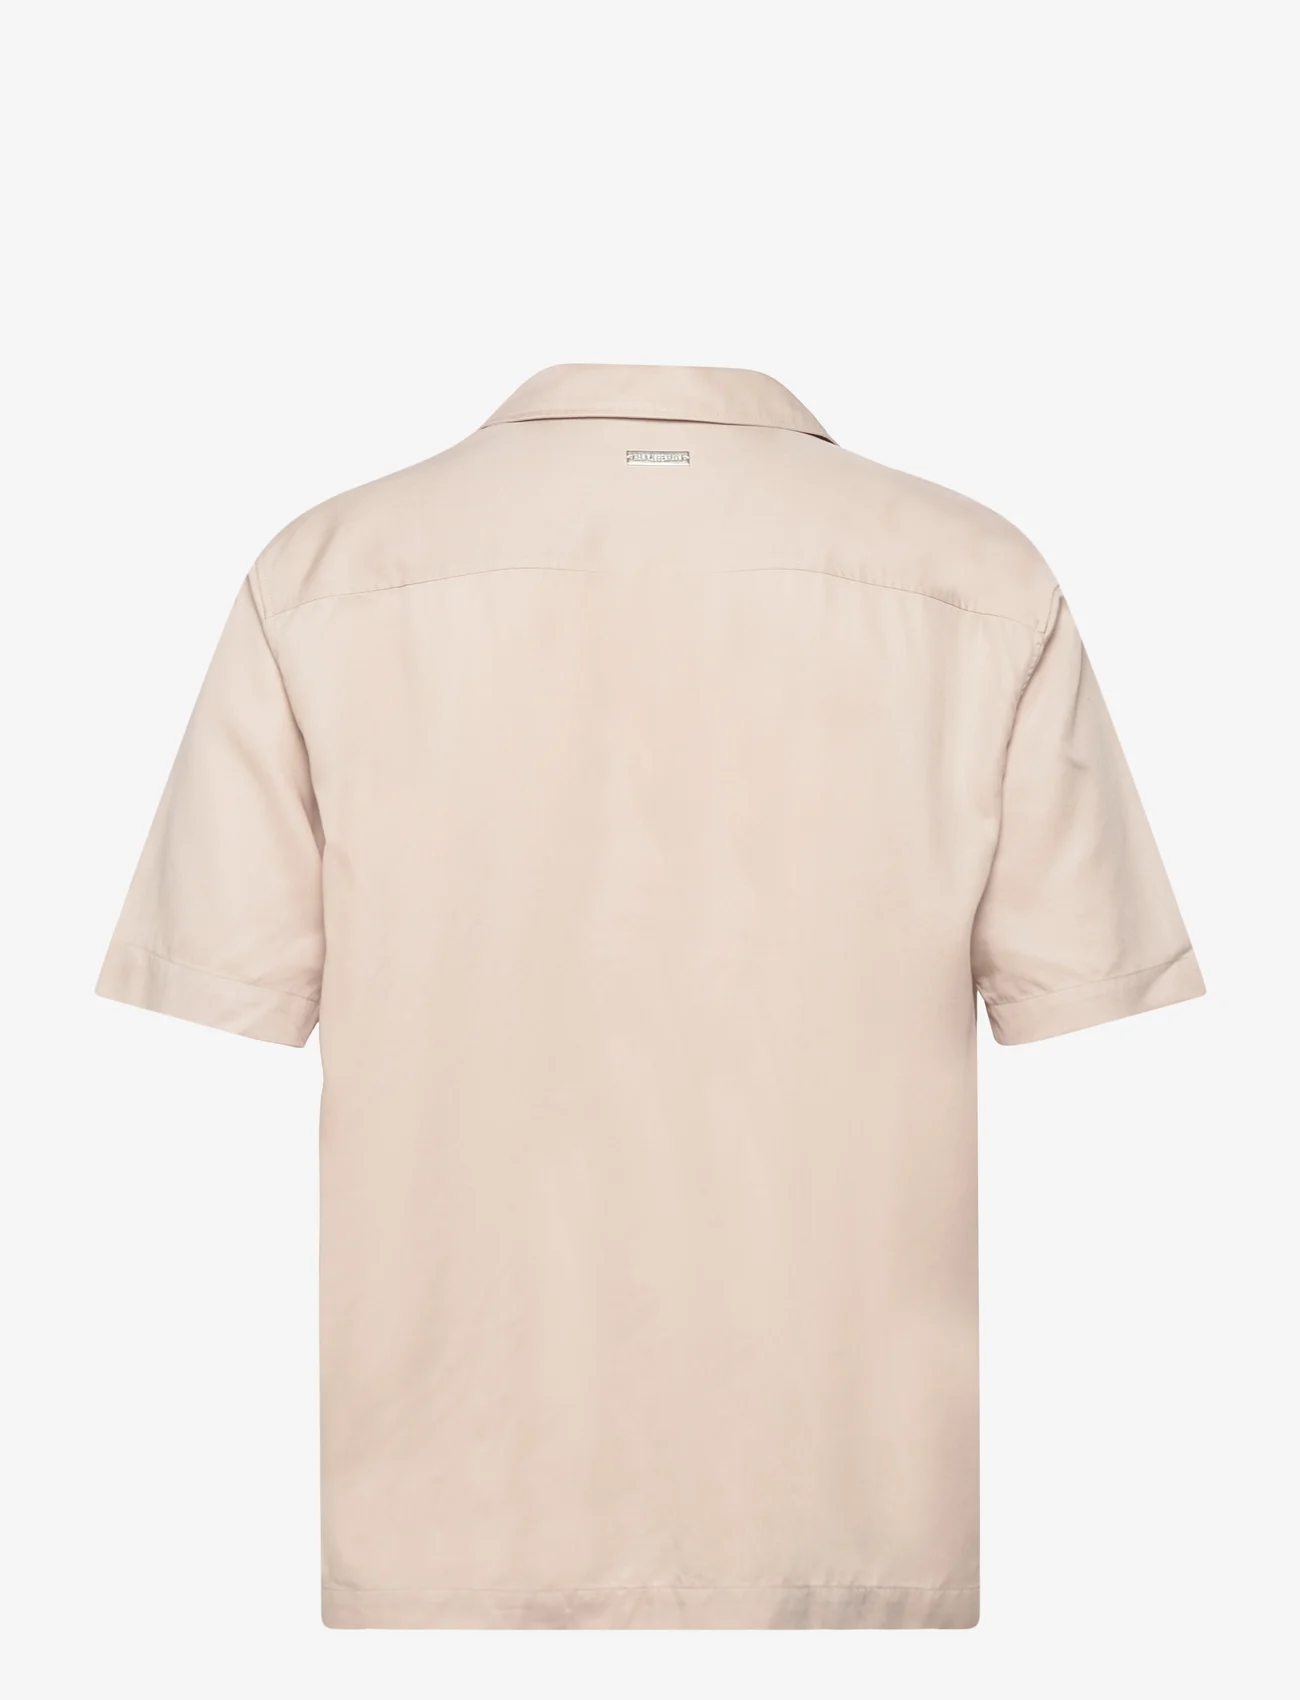 HAN Kjøbenhavn - Tencel Summer Shirt - marškinėliai trumpomis rankovėmis - sand - 1